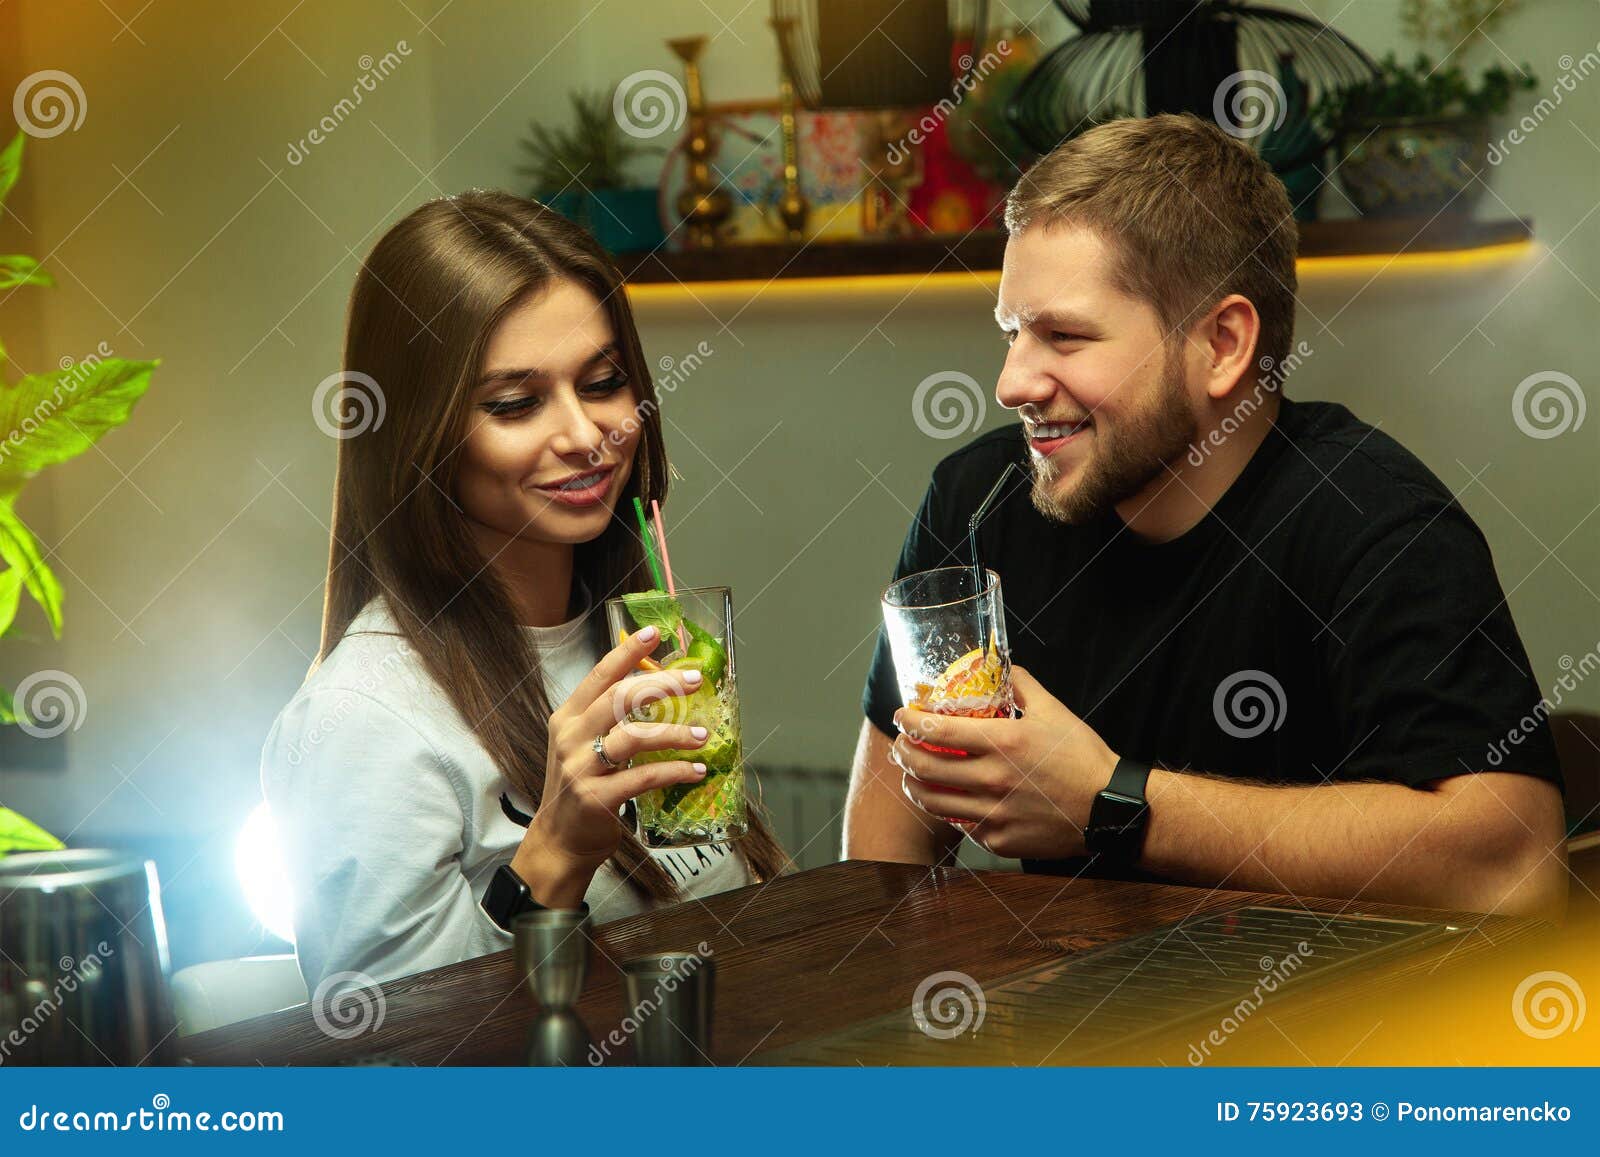 man flirting with beautiful woman in the bar